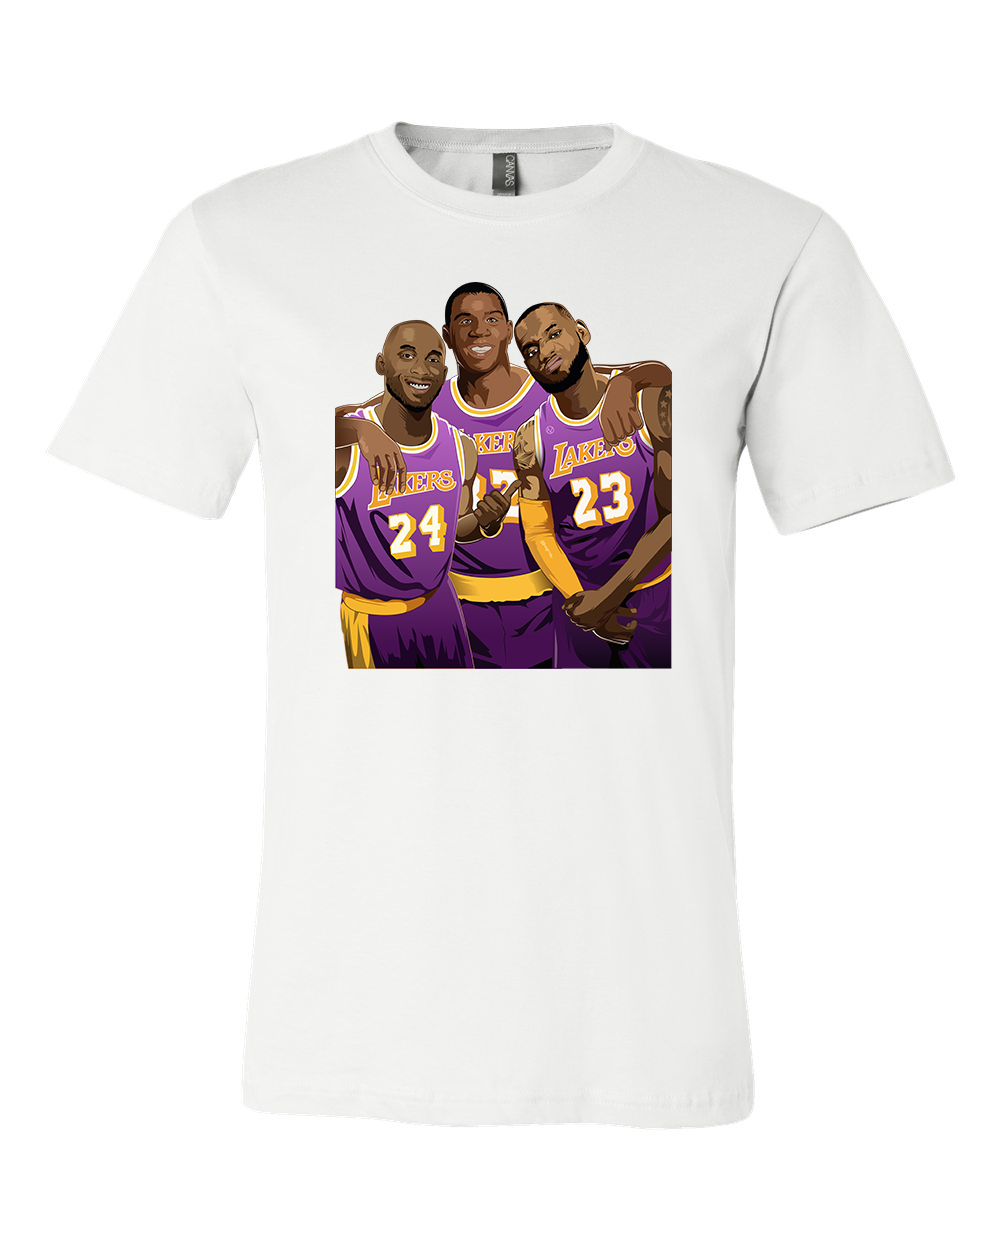 Los Angeles Lakers Geats Lebron Kobe Magic logo T shirt S through 3XL!